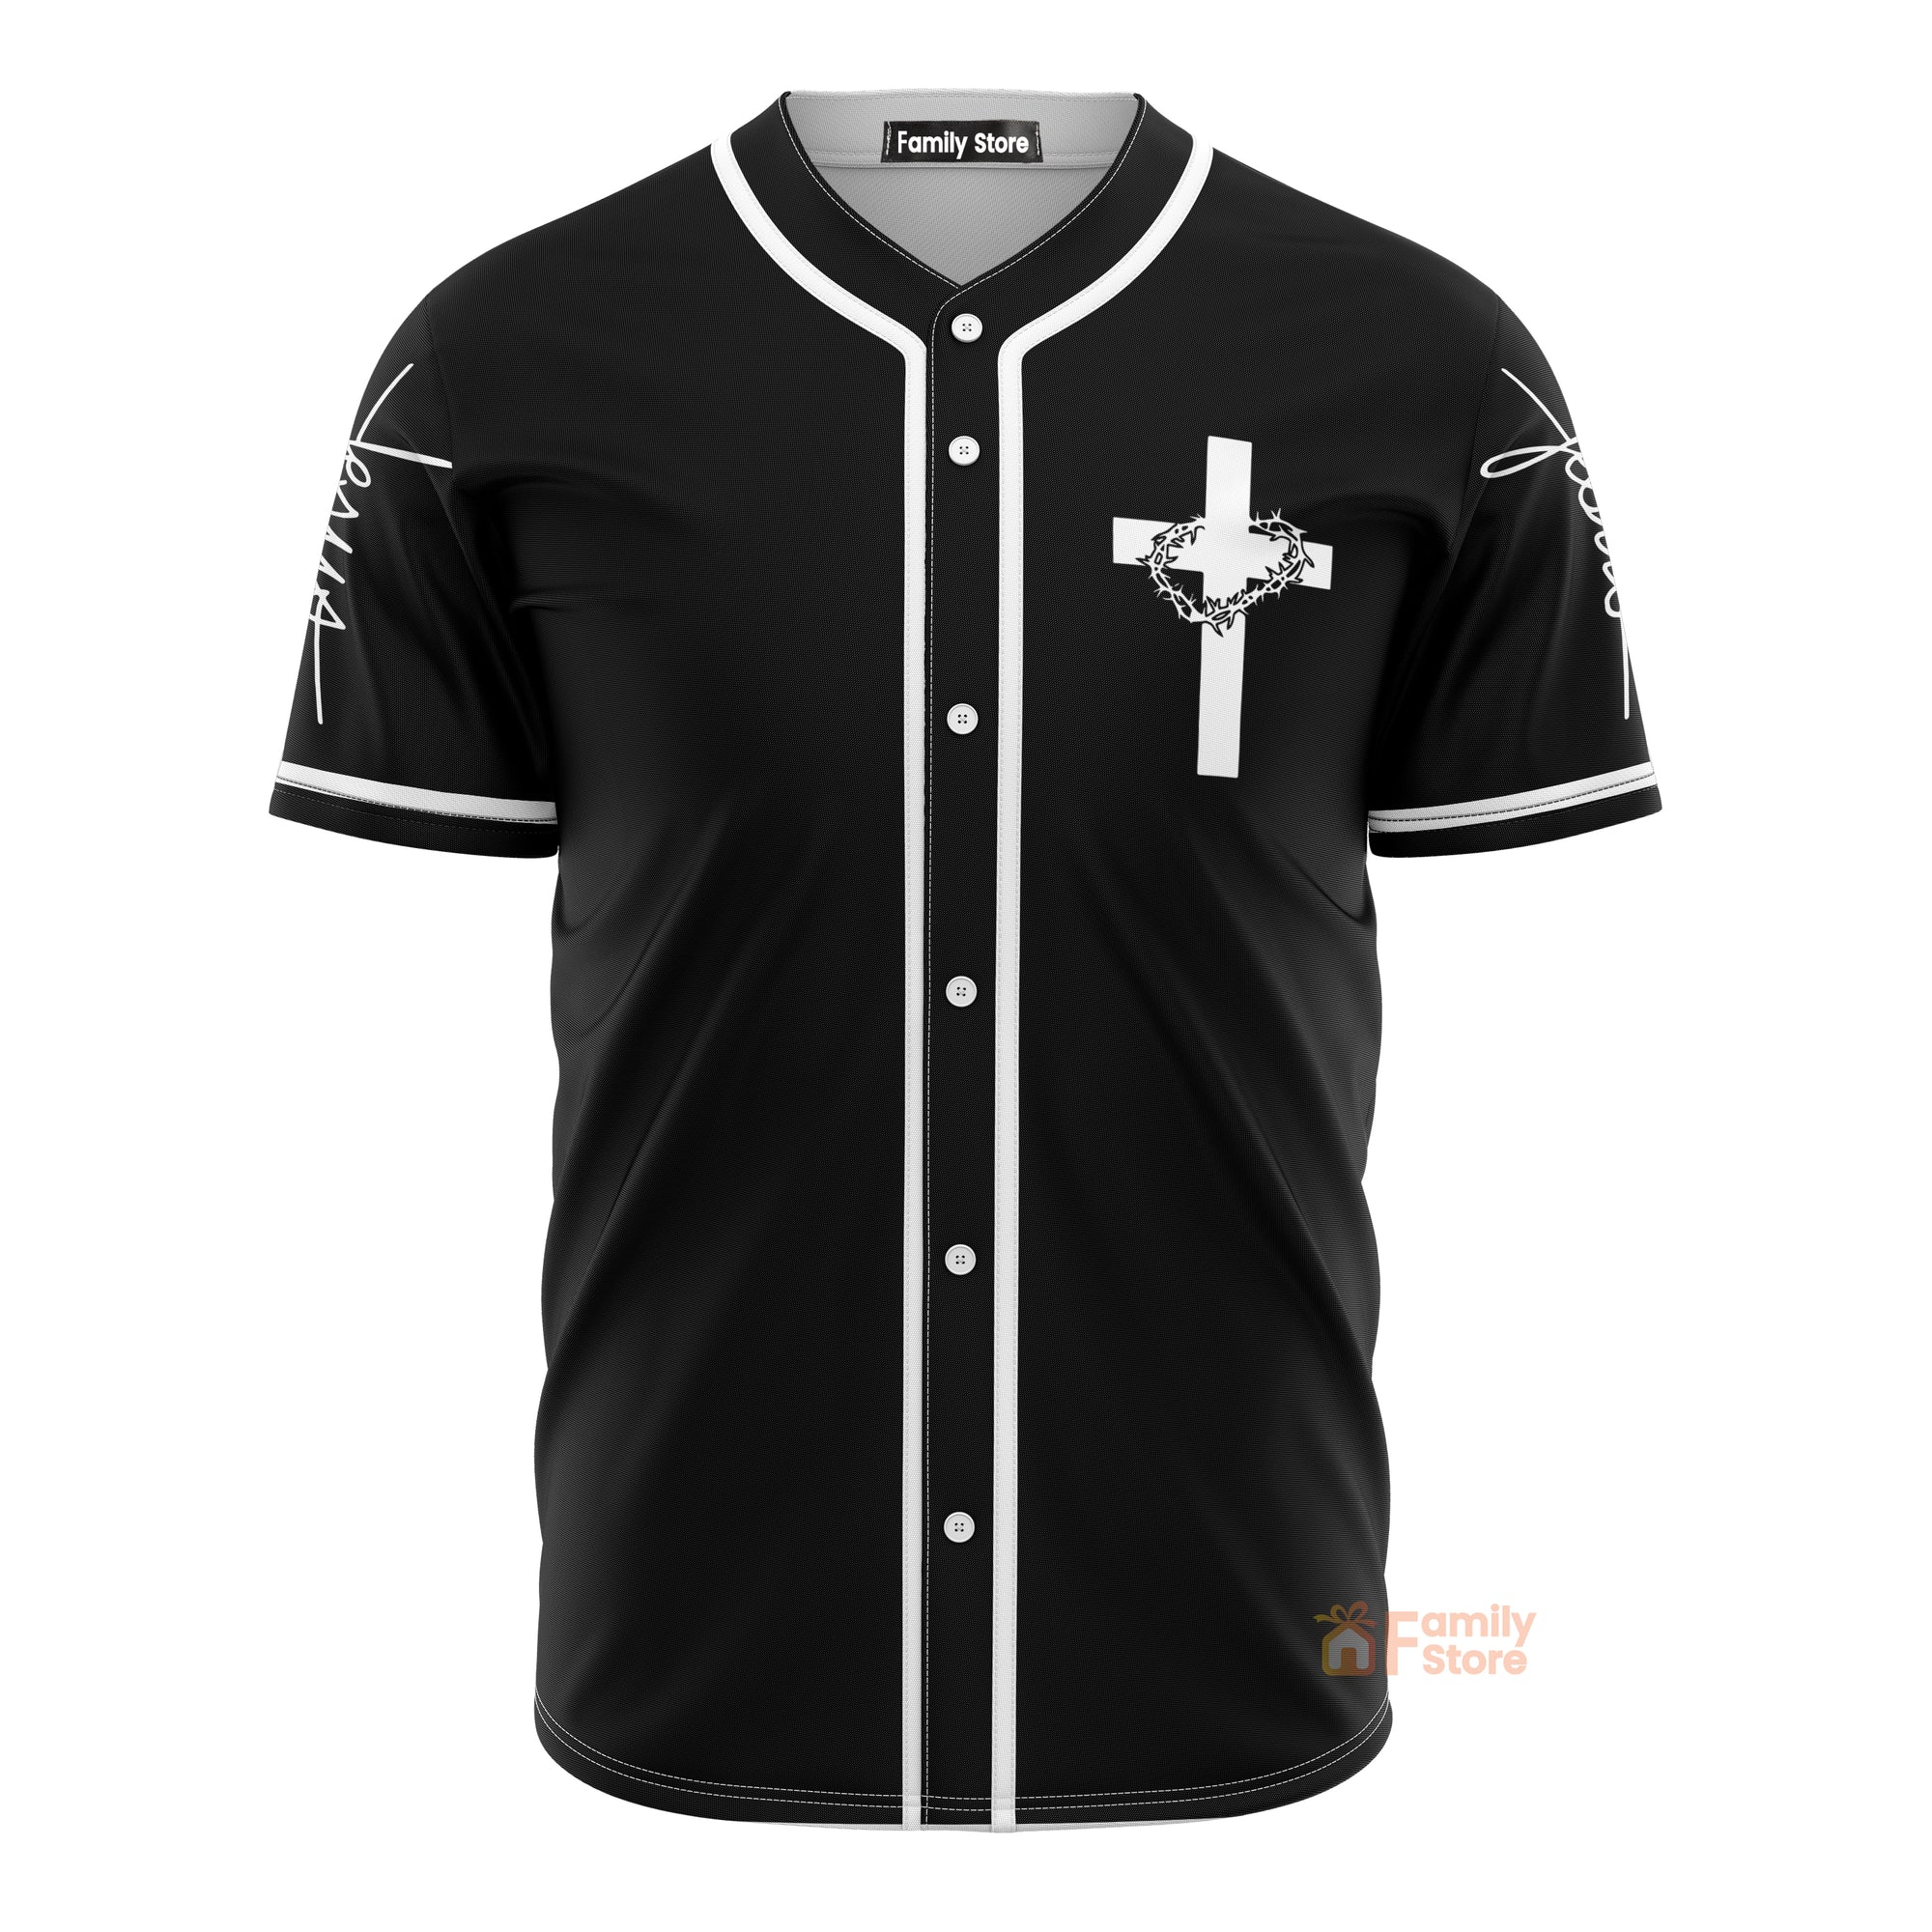 Personalized Jesus Baseball Jersey - Cross, God Baseball Jersey - Gift For Christians